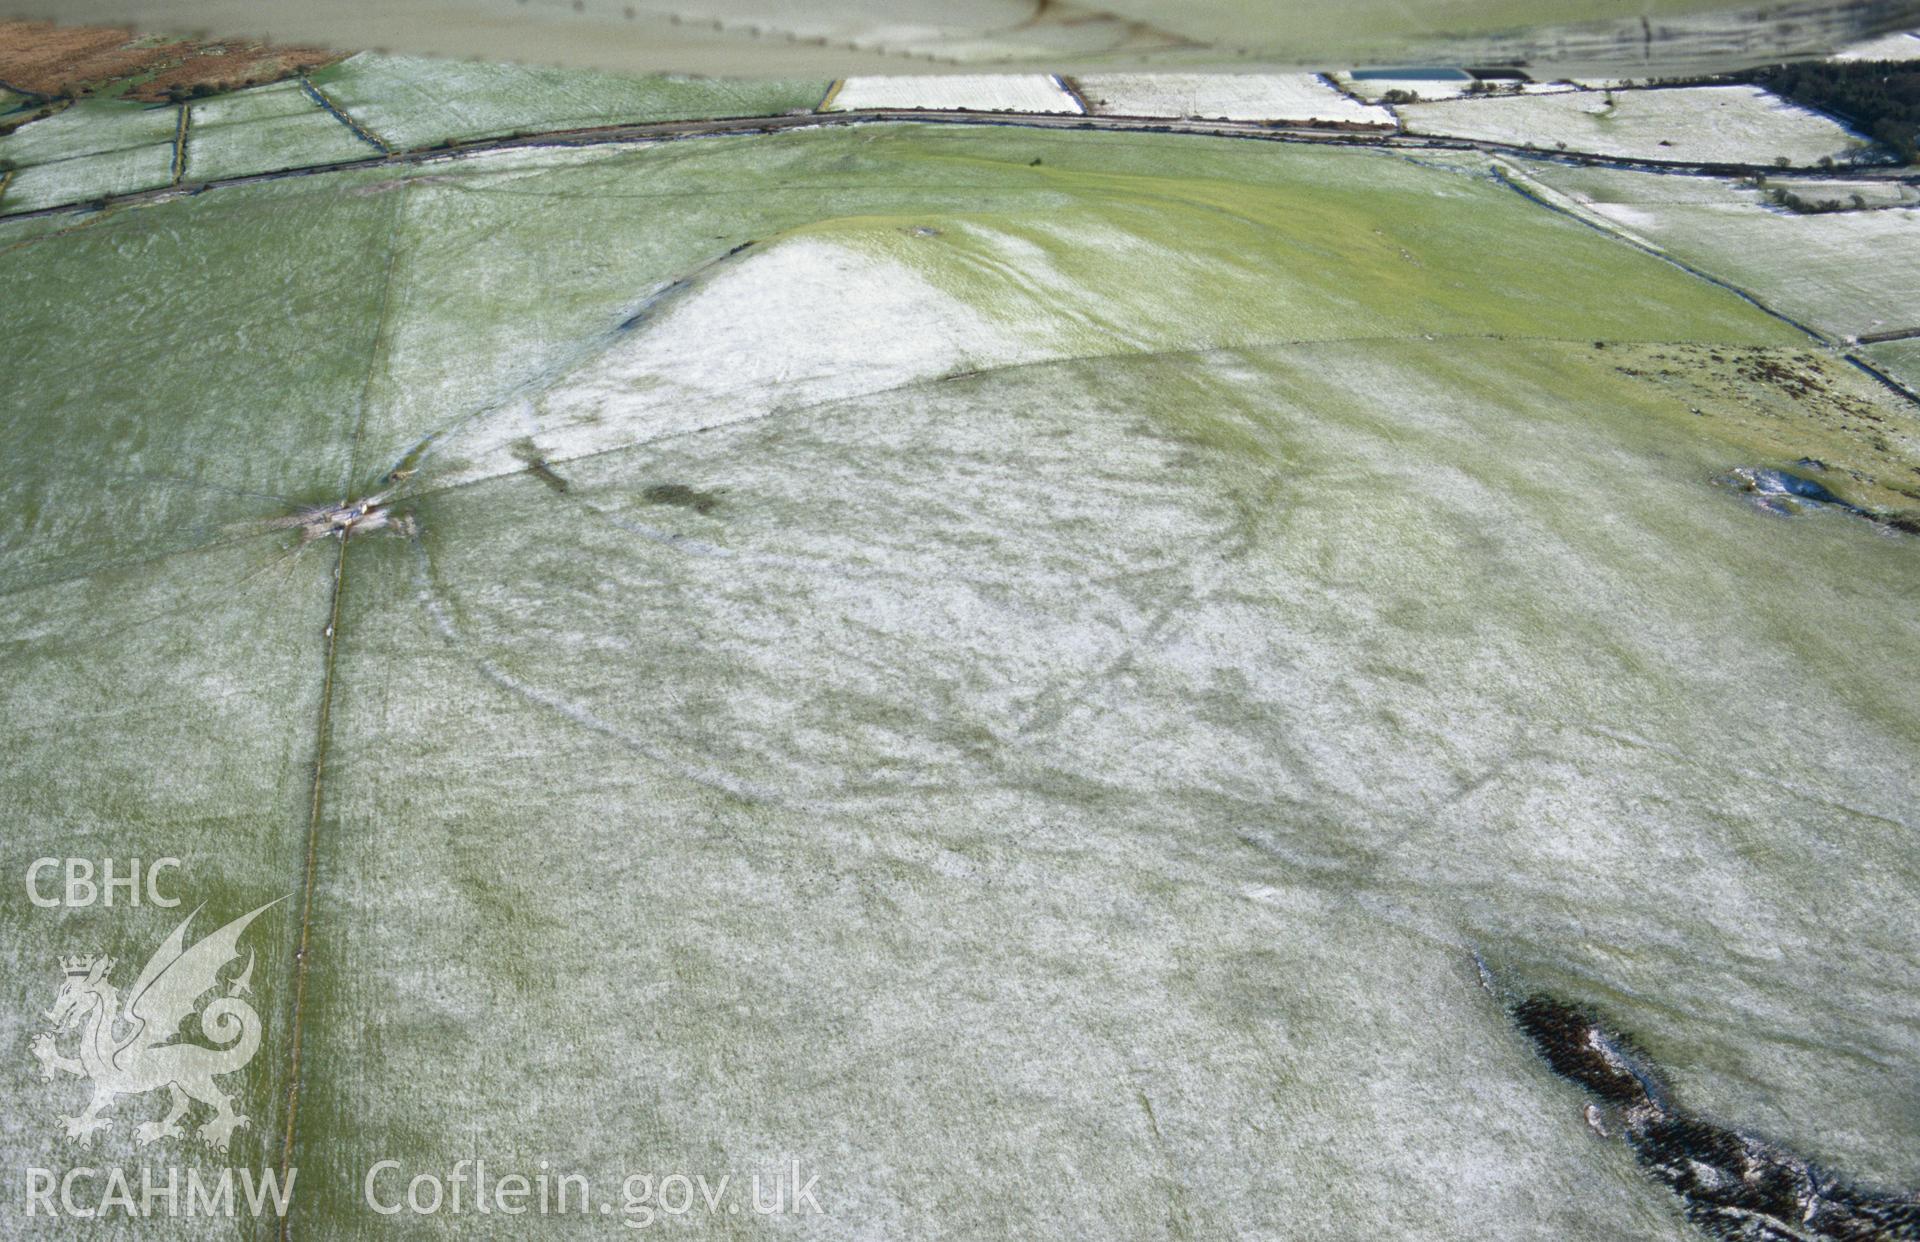 Slide of RCAHMW colour oblique aerial photograph of an enclosure at Banc Du, taken by Toby Driver, 2004.